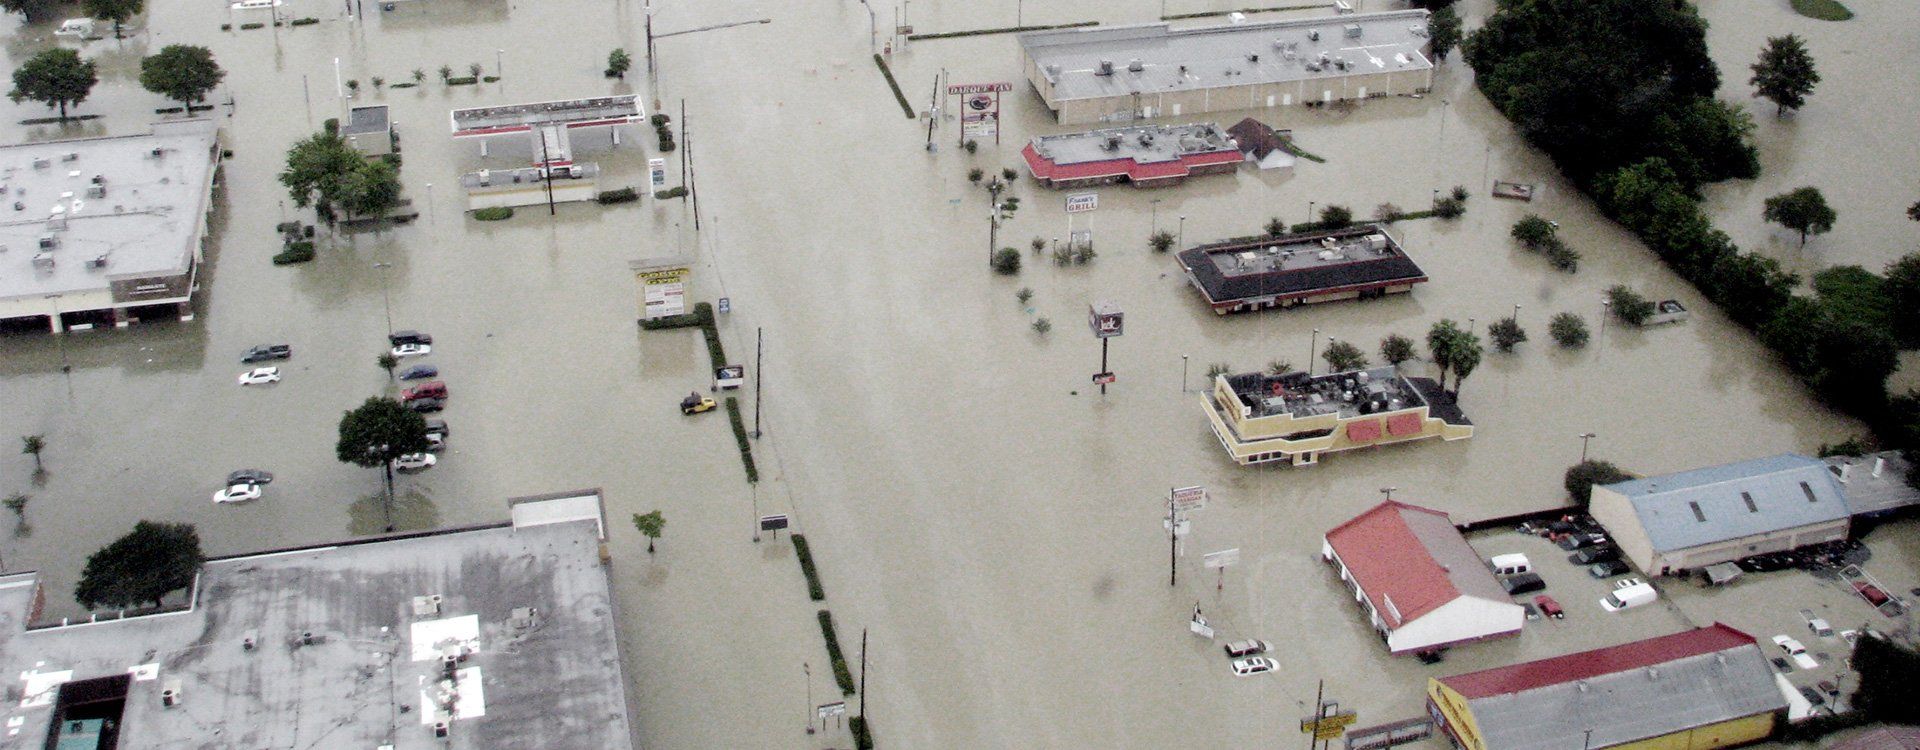 bnr-texas-flooding-aerial-town